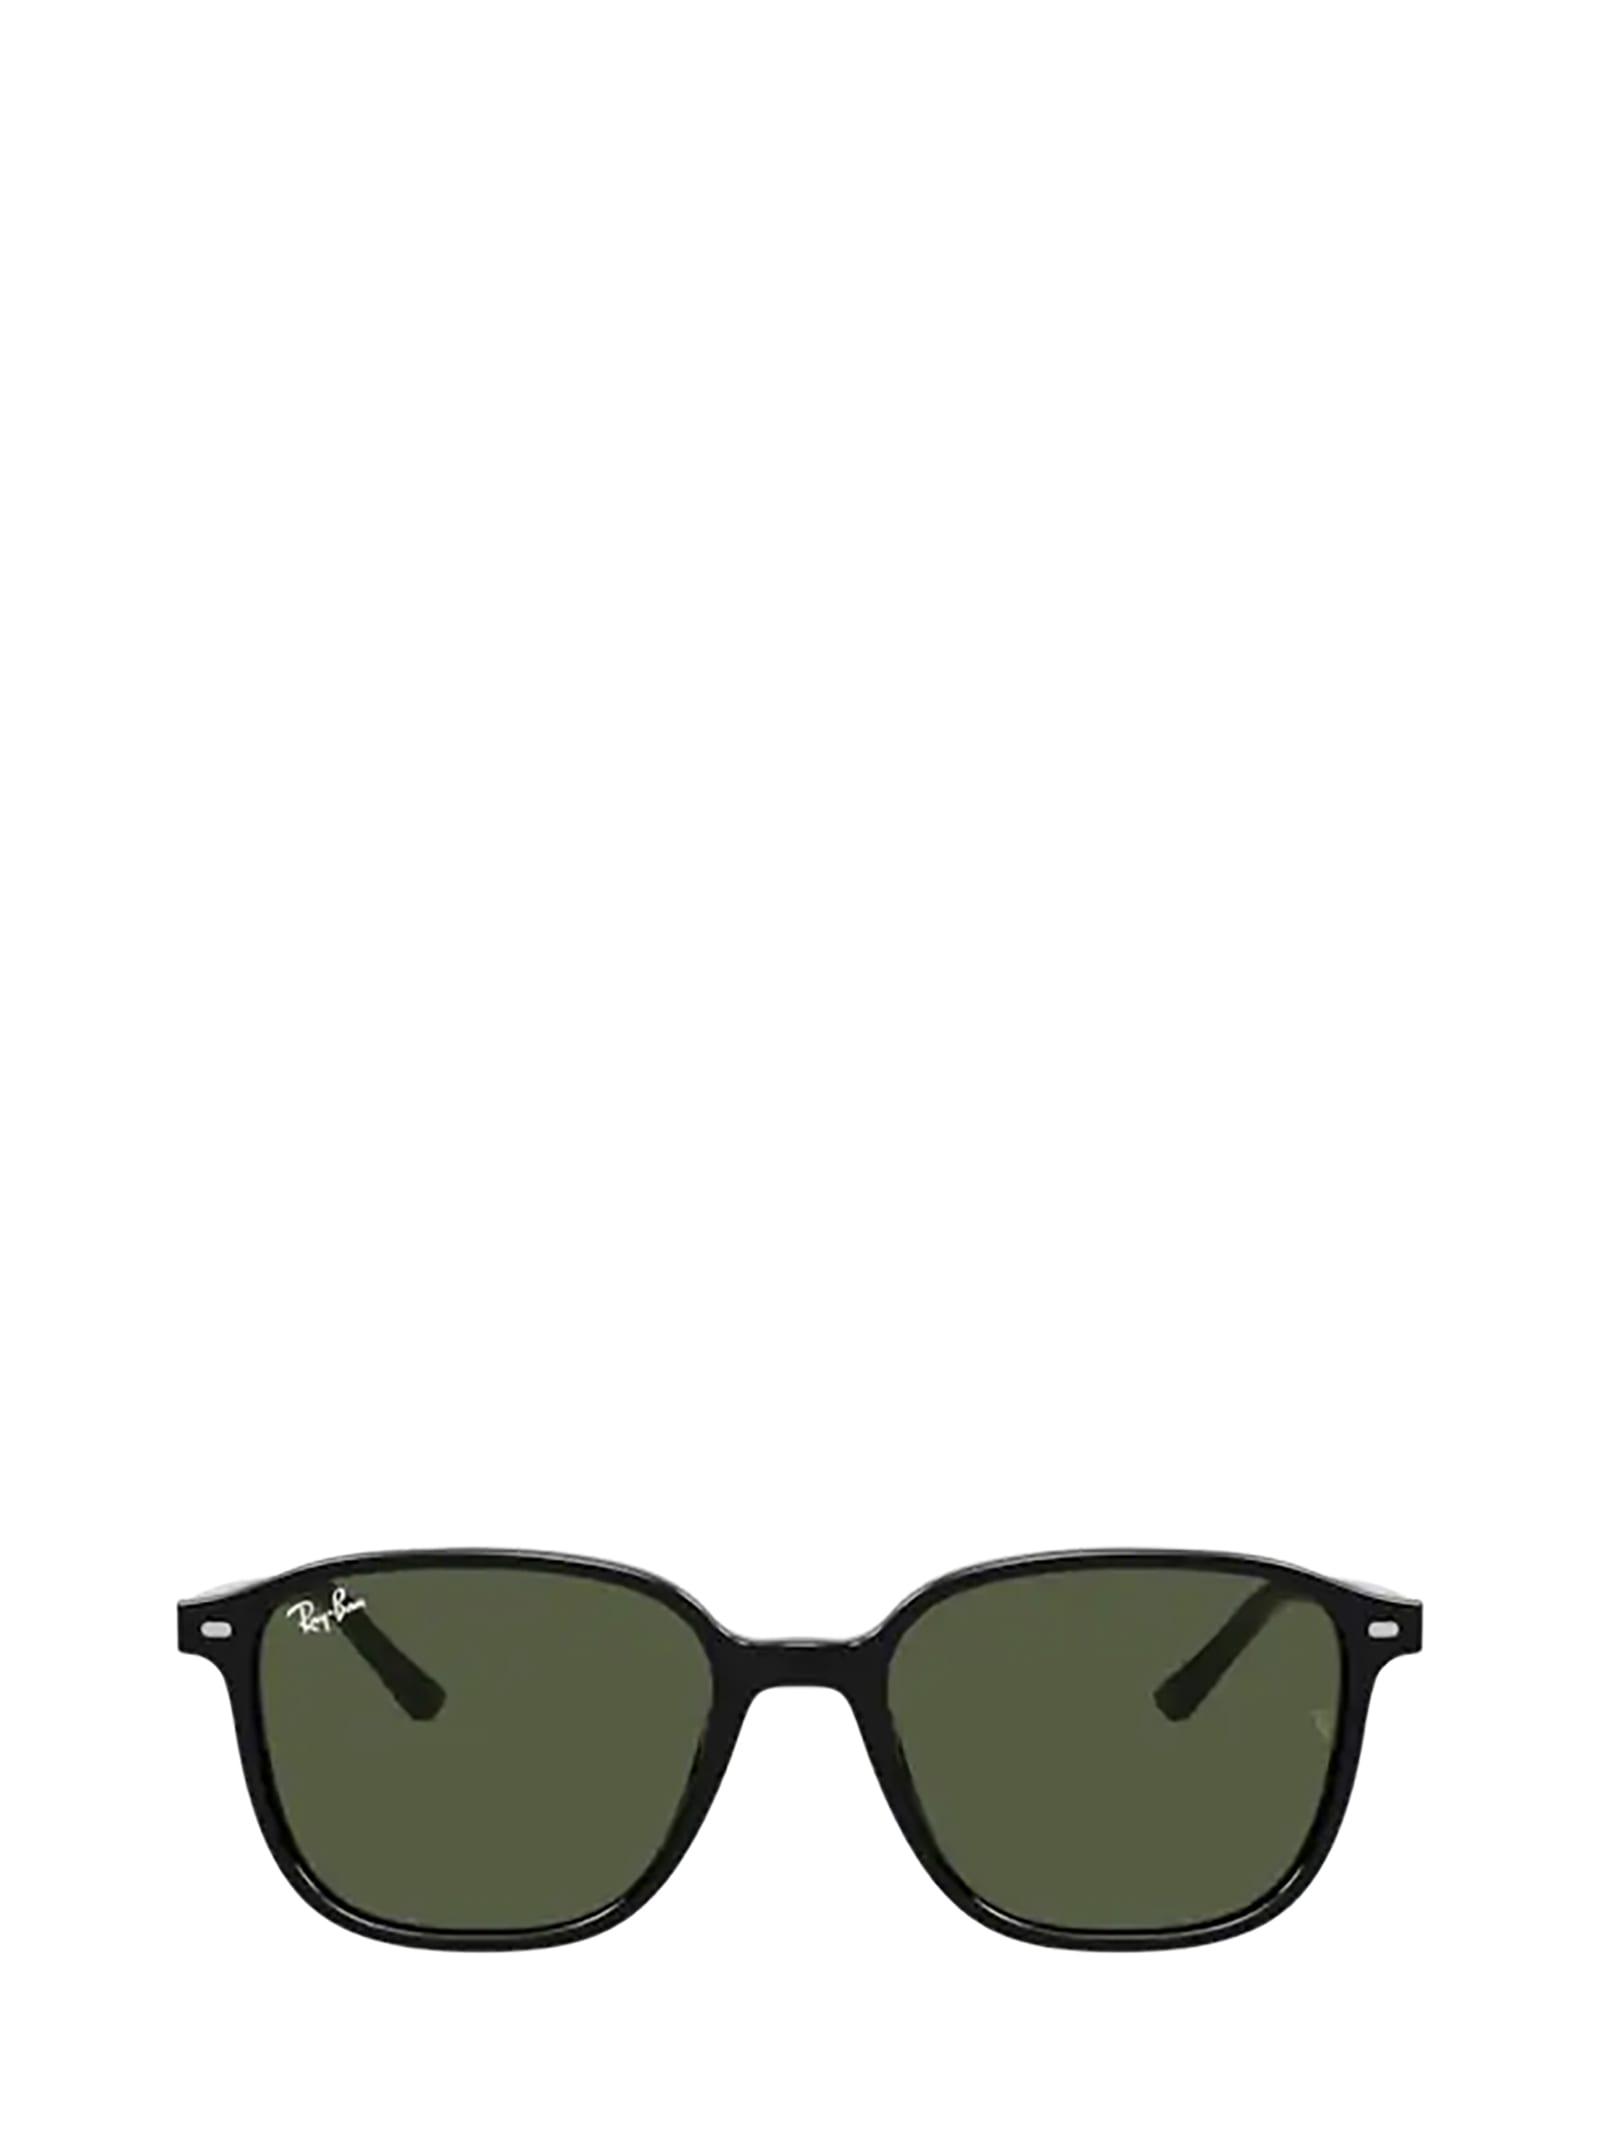 Ray Ban Ray-ban Rb2193 Black Sunglasses